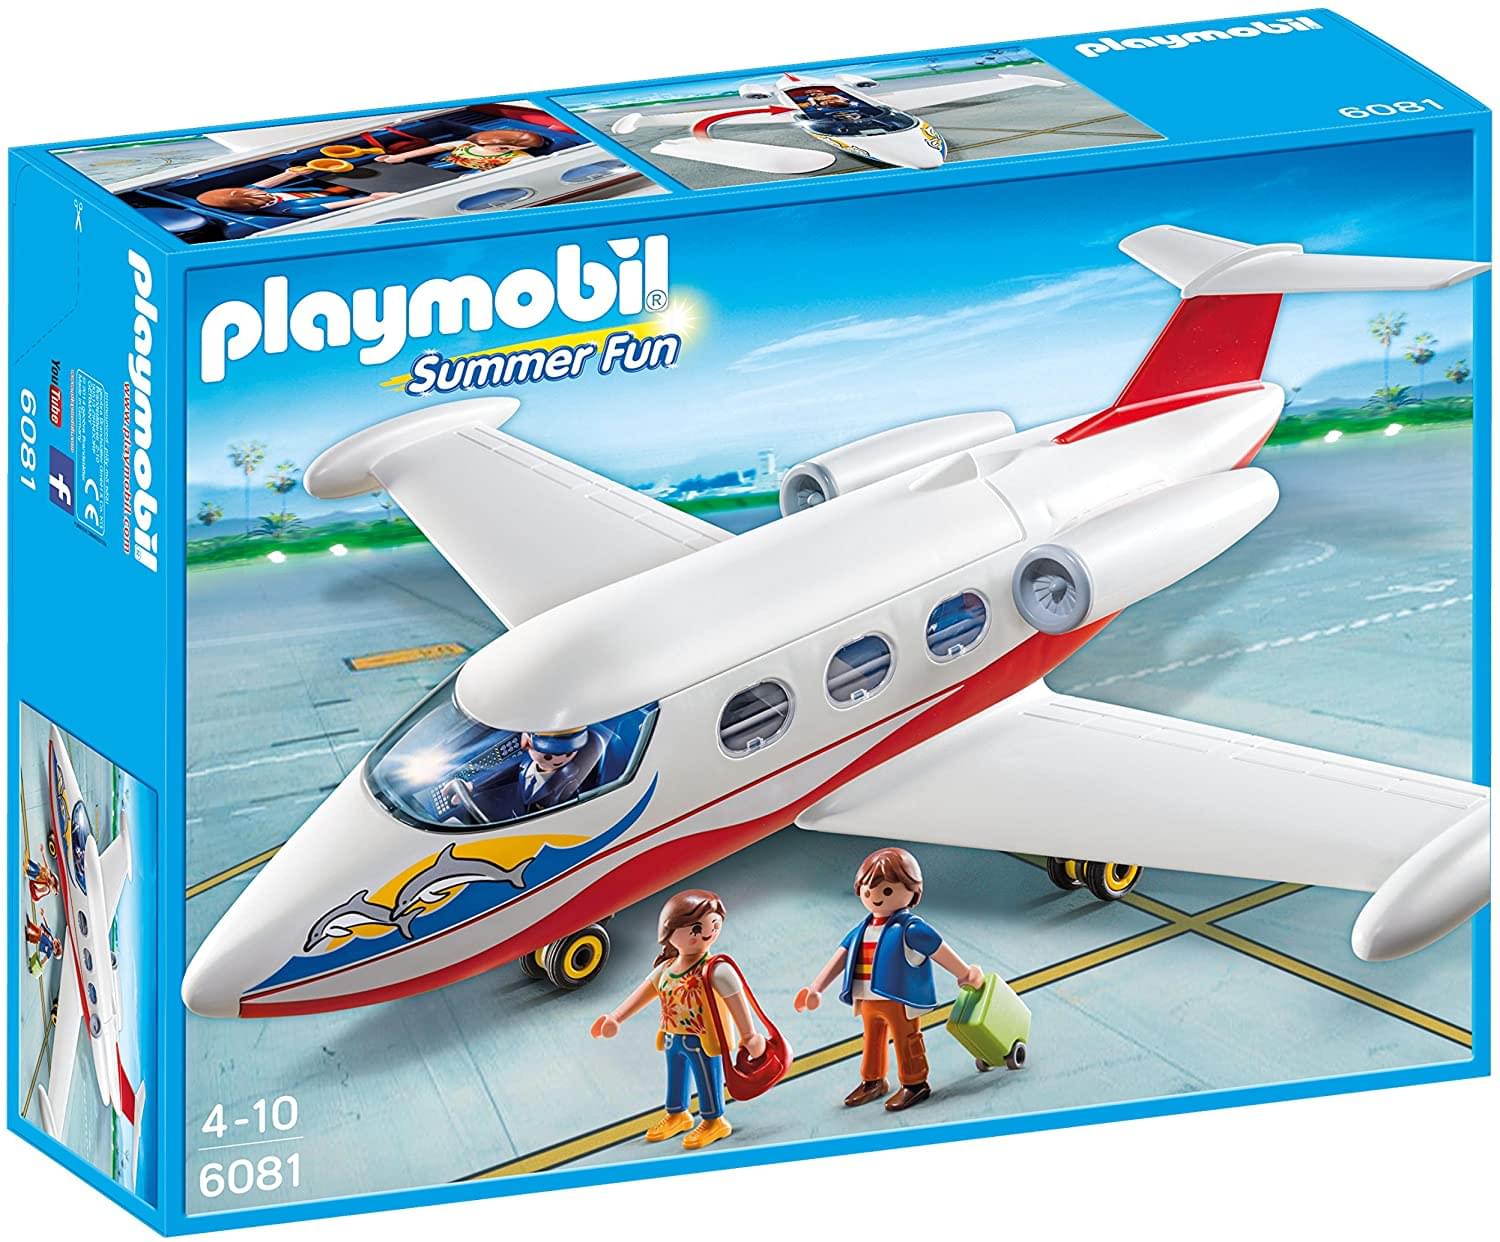 Playmobil 6081 Summer Fun Summer Jet Play Set